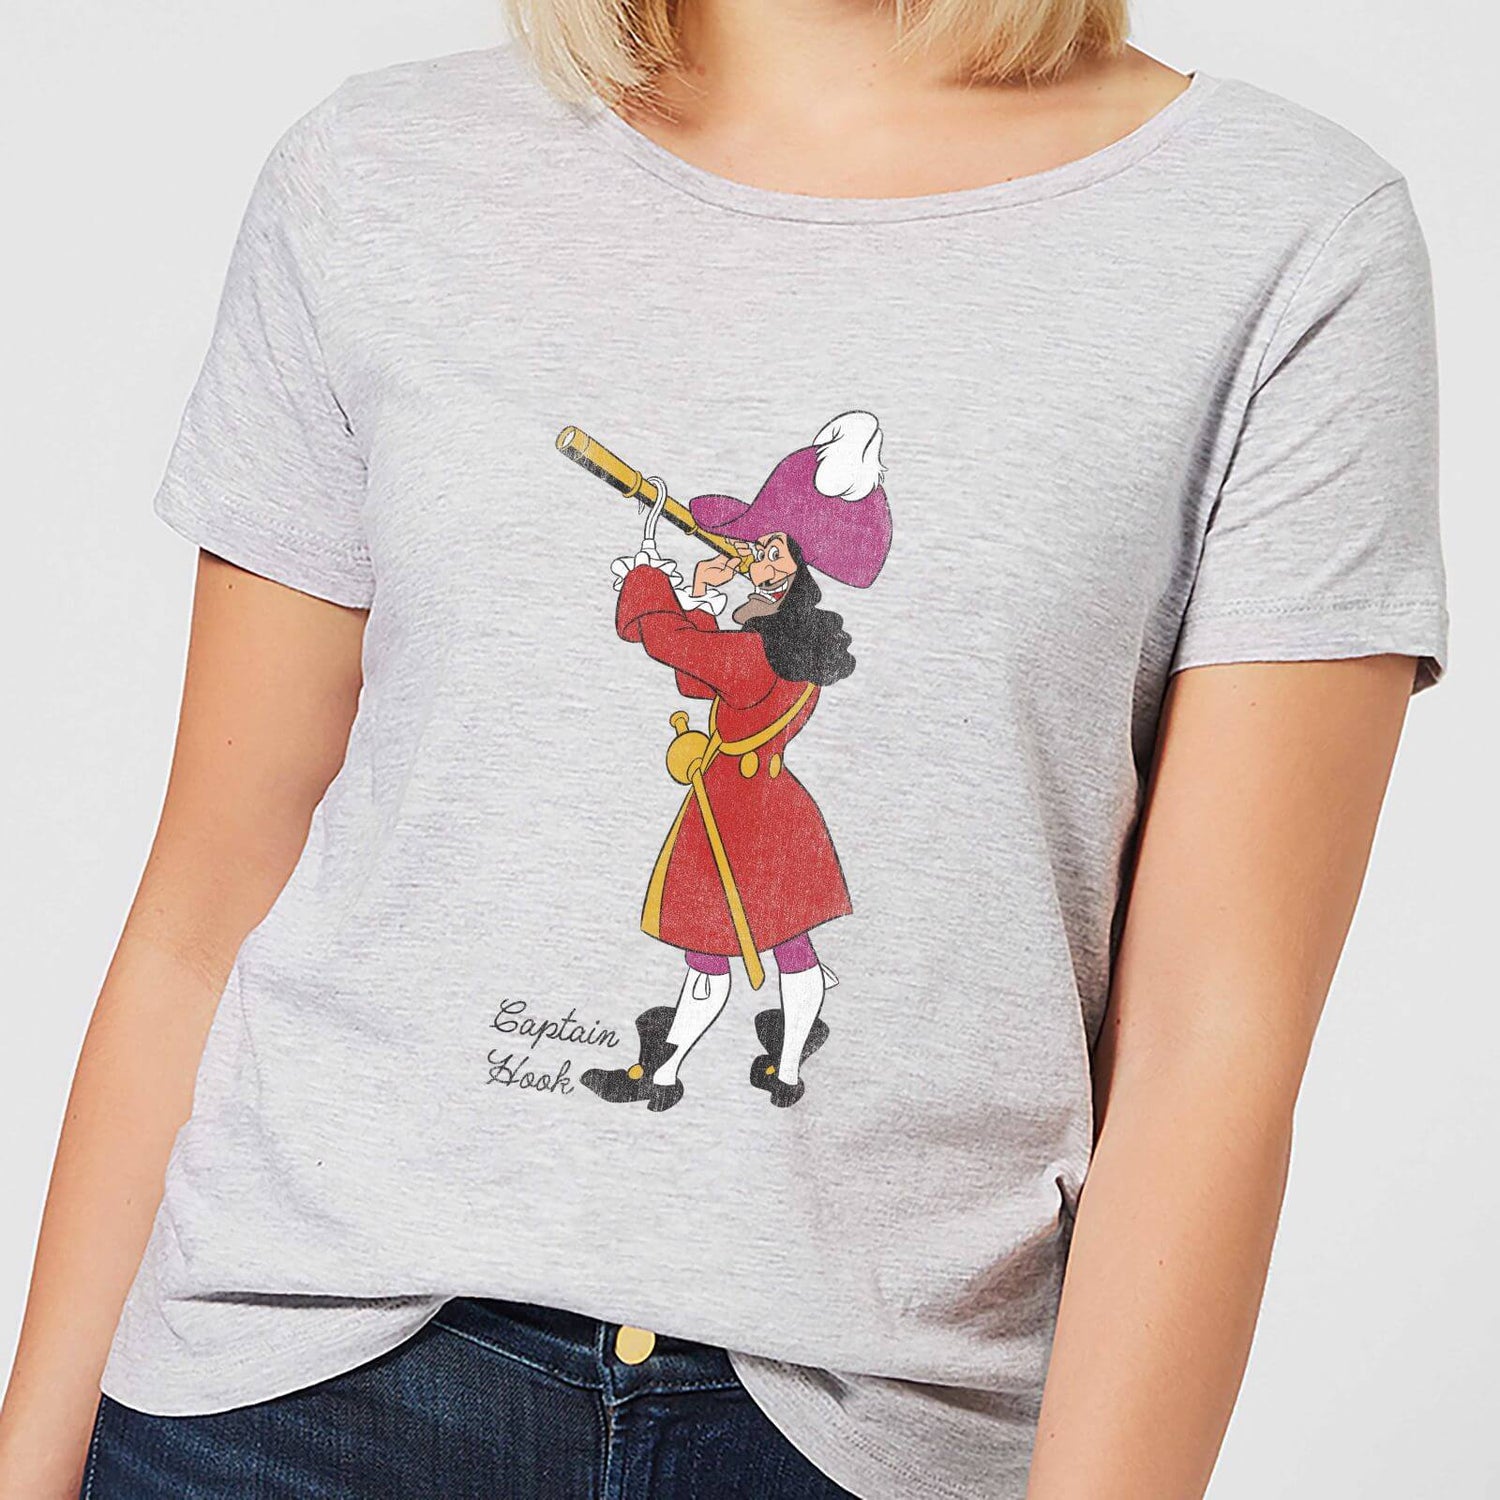 Disney Peter Pan Captain Hook Classic Women's T-Shirt - Grey - M